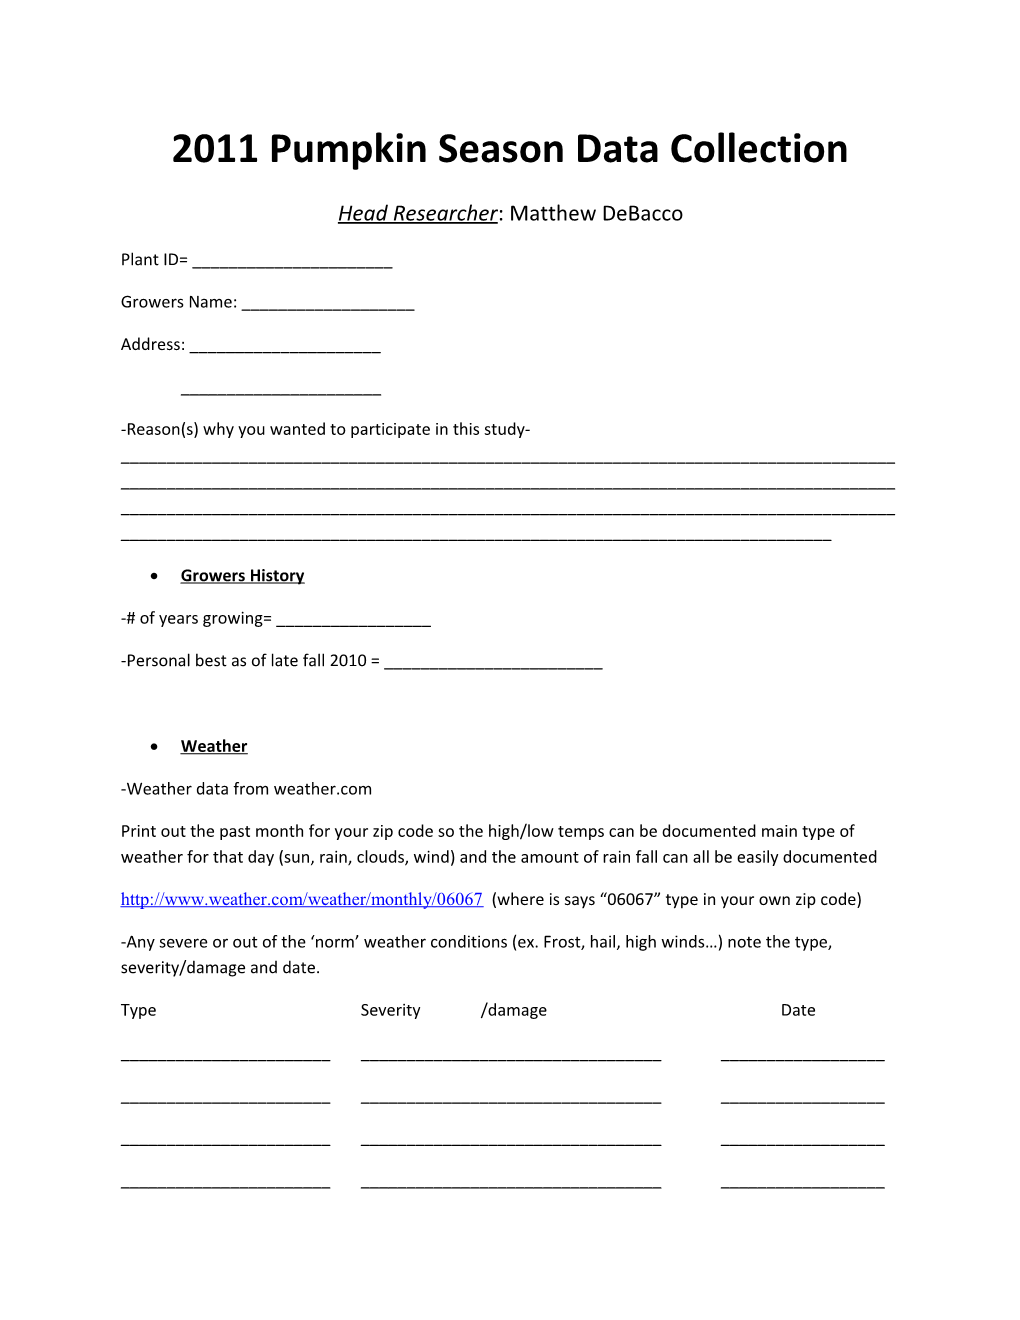 2011 Pumpkin Season Data Collection